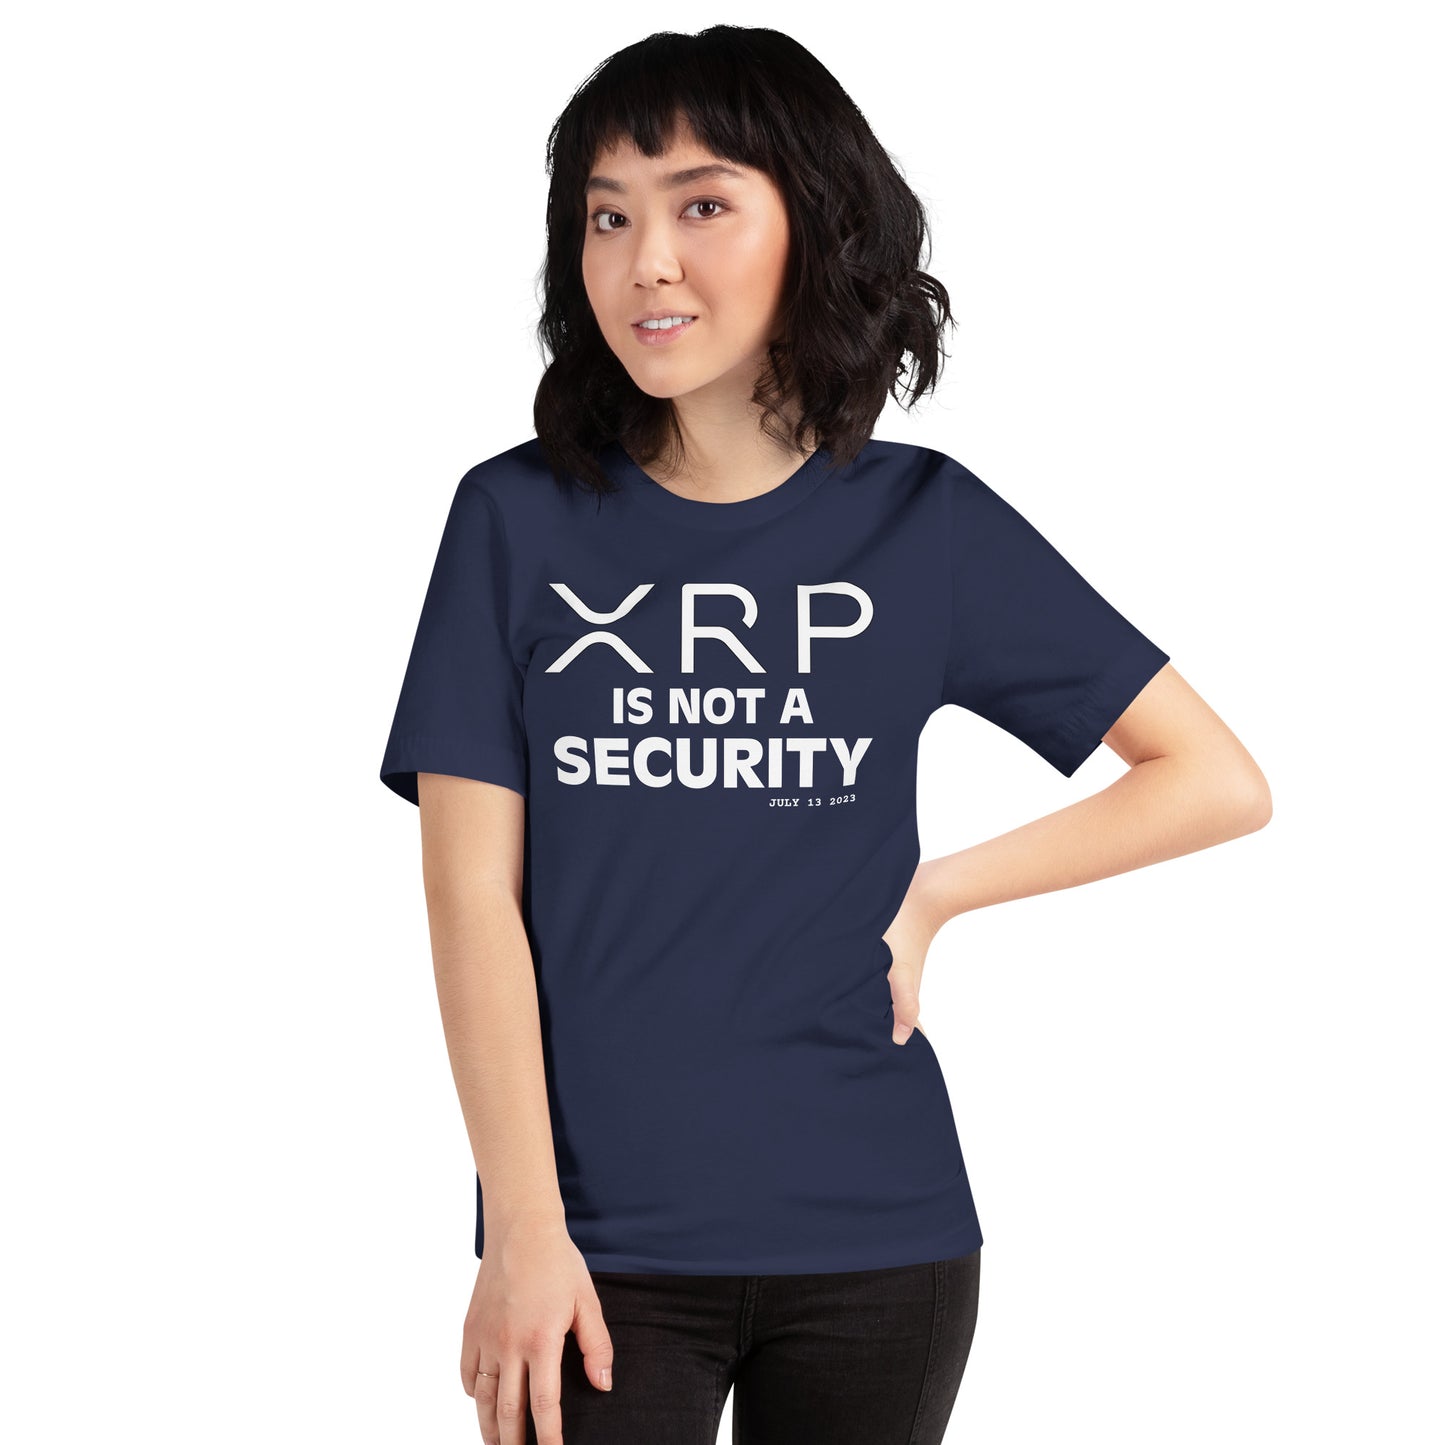 Xrp Not a Security T-Shirt